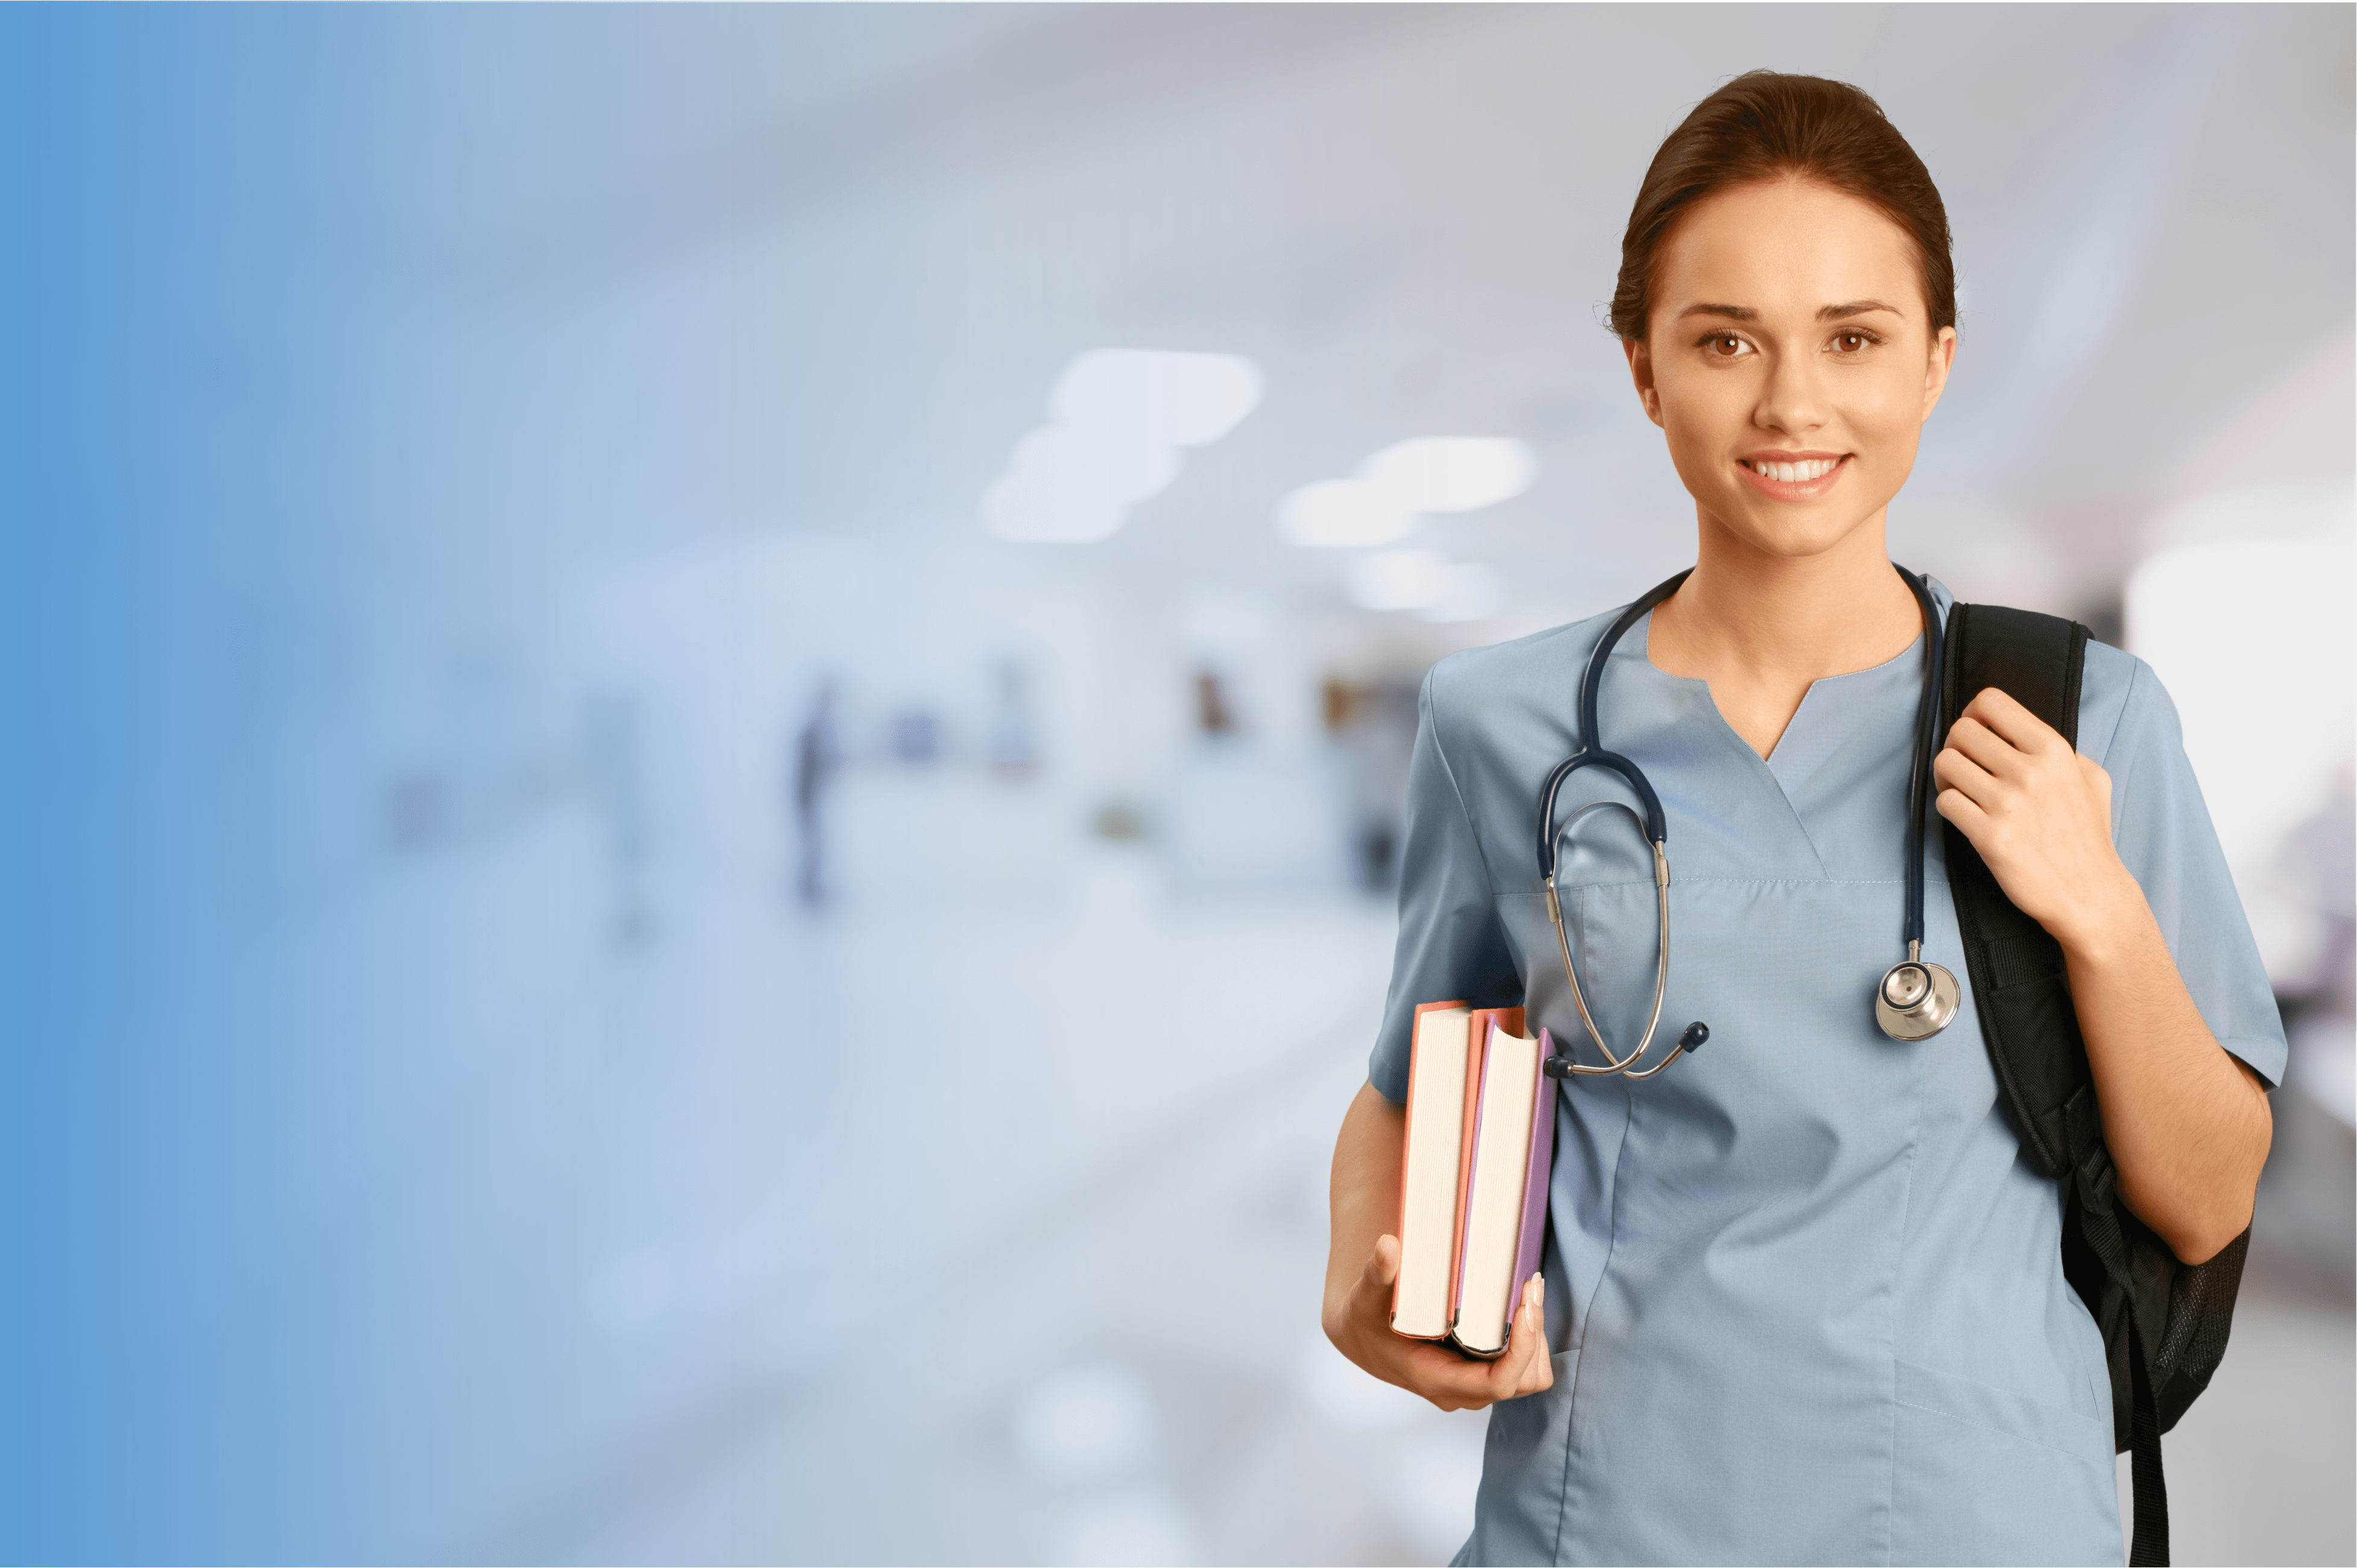 Nursing Instructor – NCLEX-RN Exam Prep Course